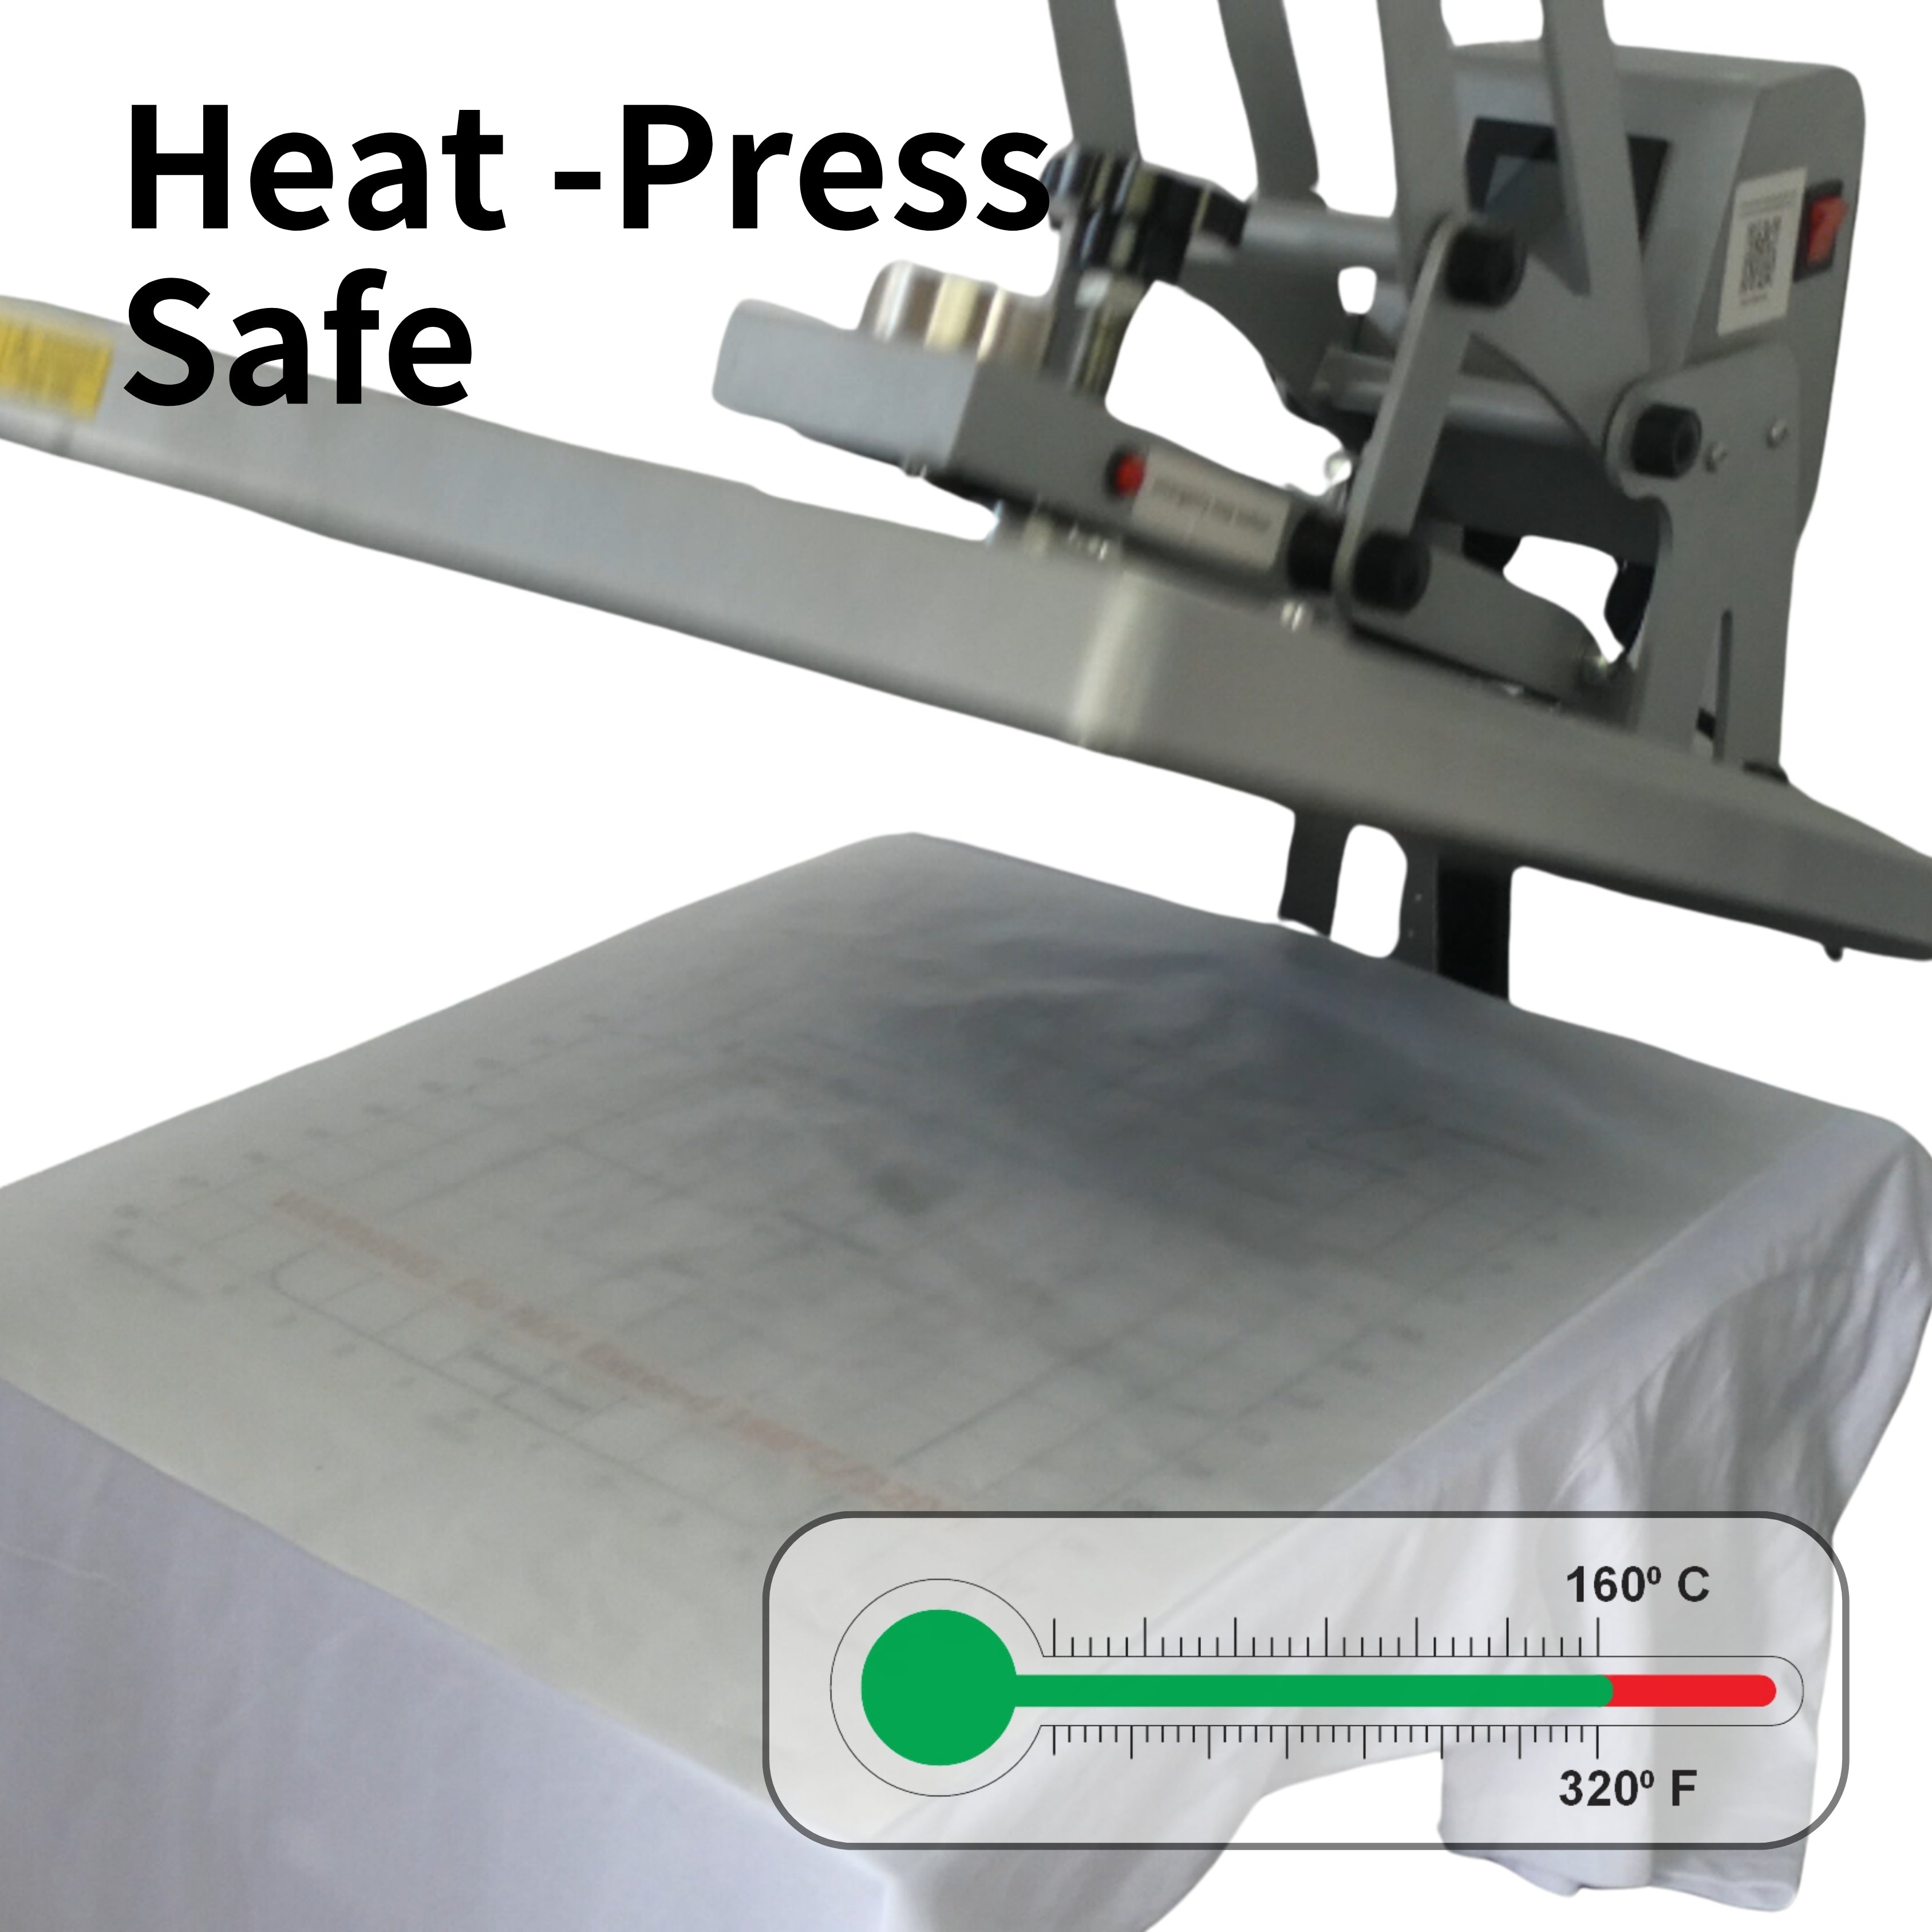 Heat Press Safe - TShirt Rulers